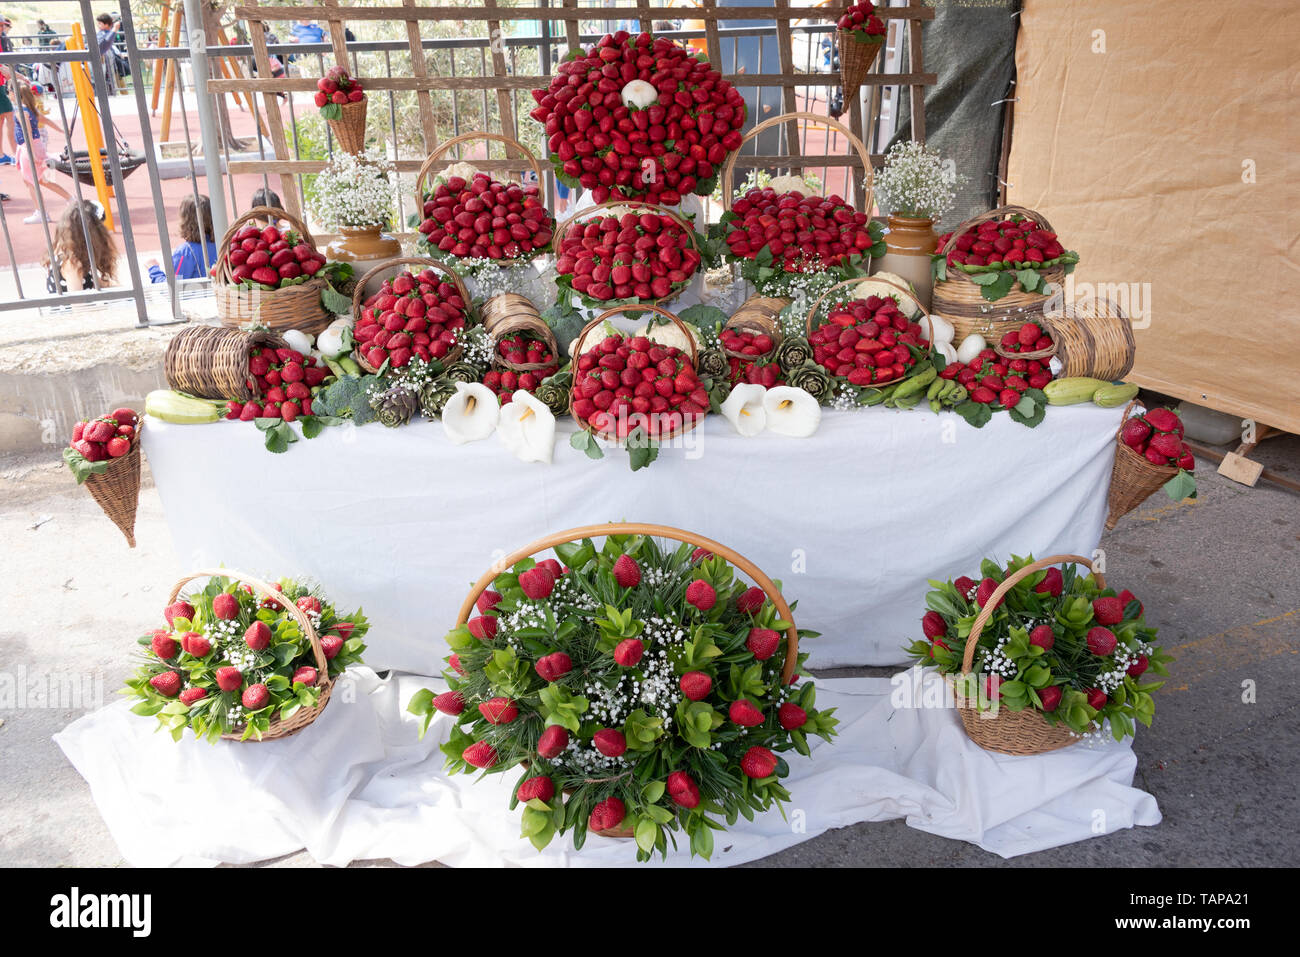 Strawberry Festival Festa Frawli in Mgarr Malta feast of food and music Stock Photo